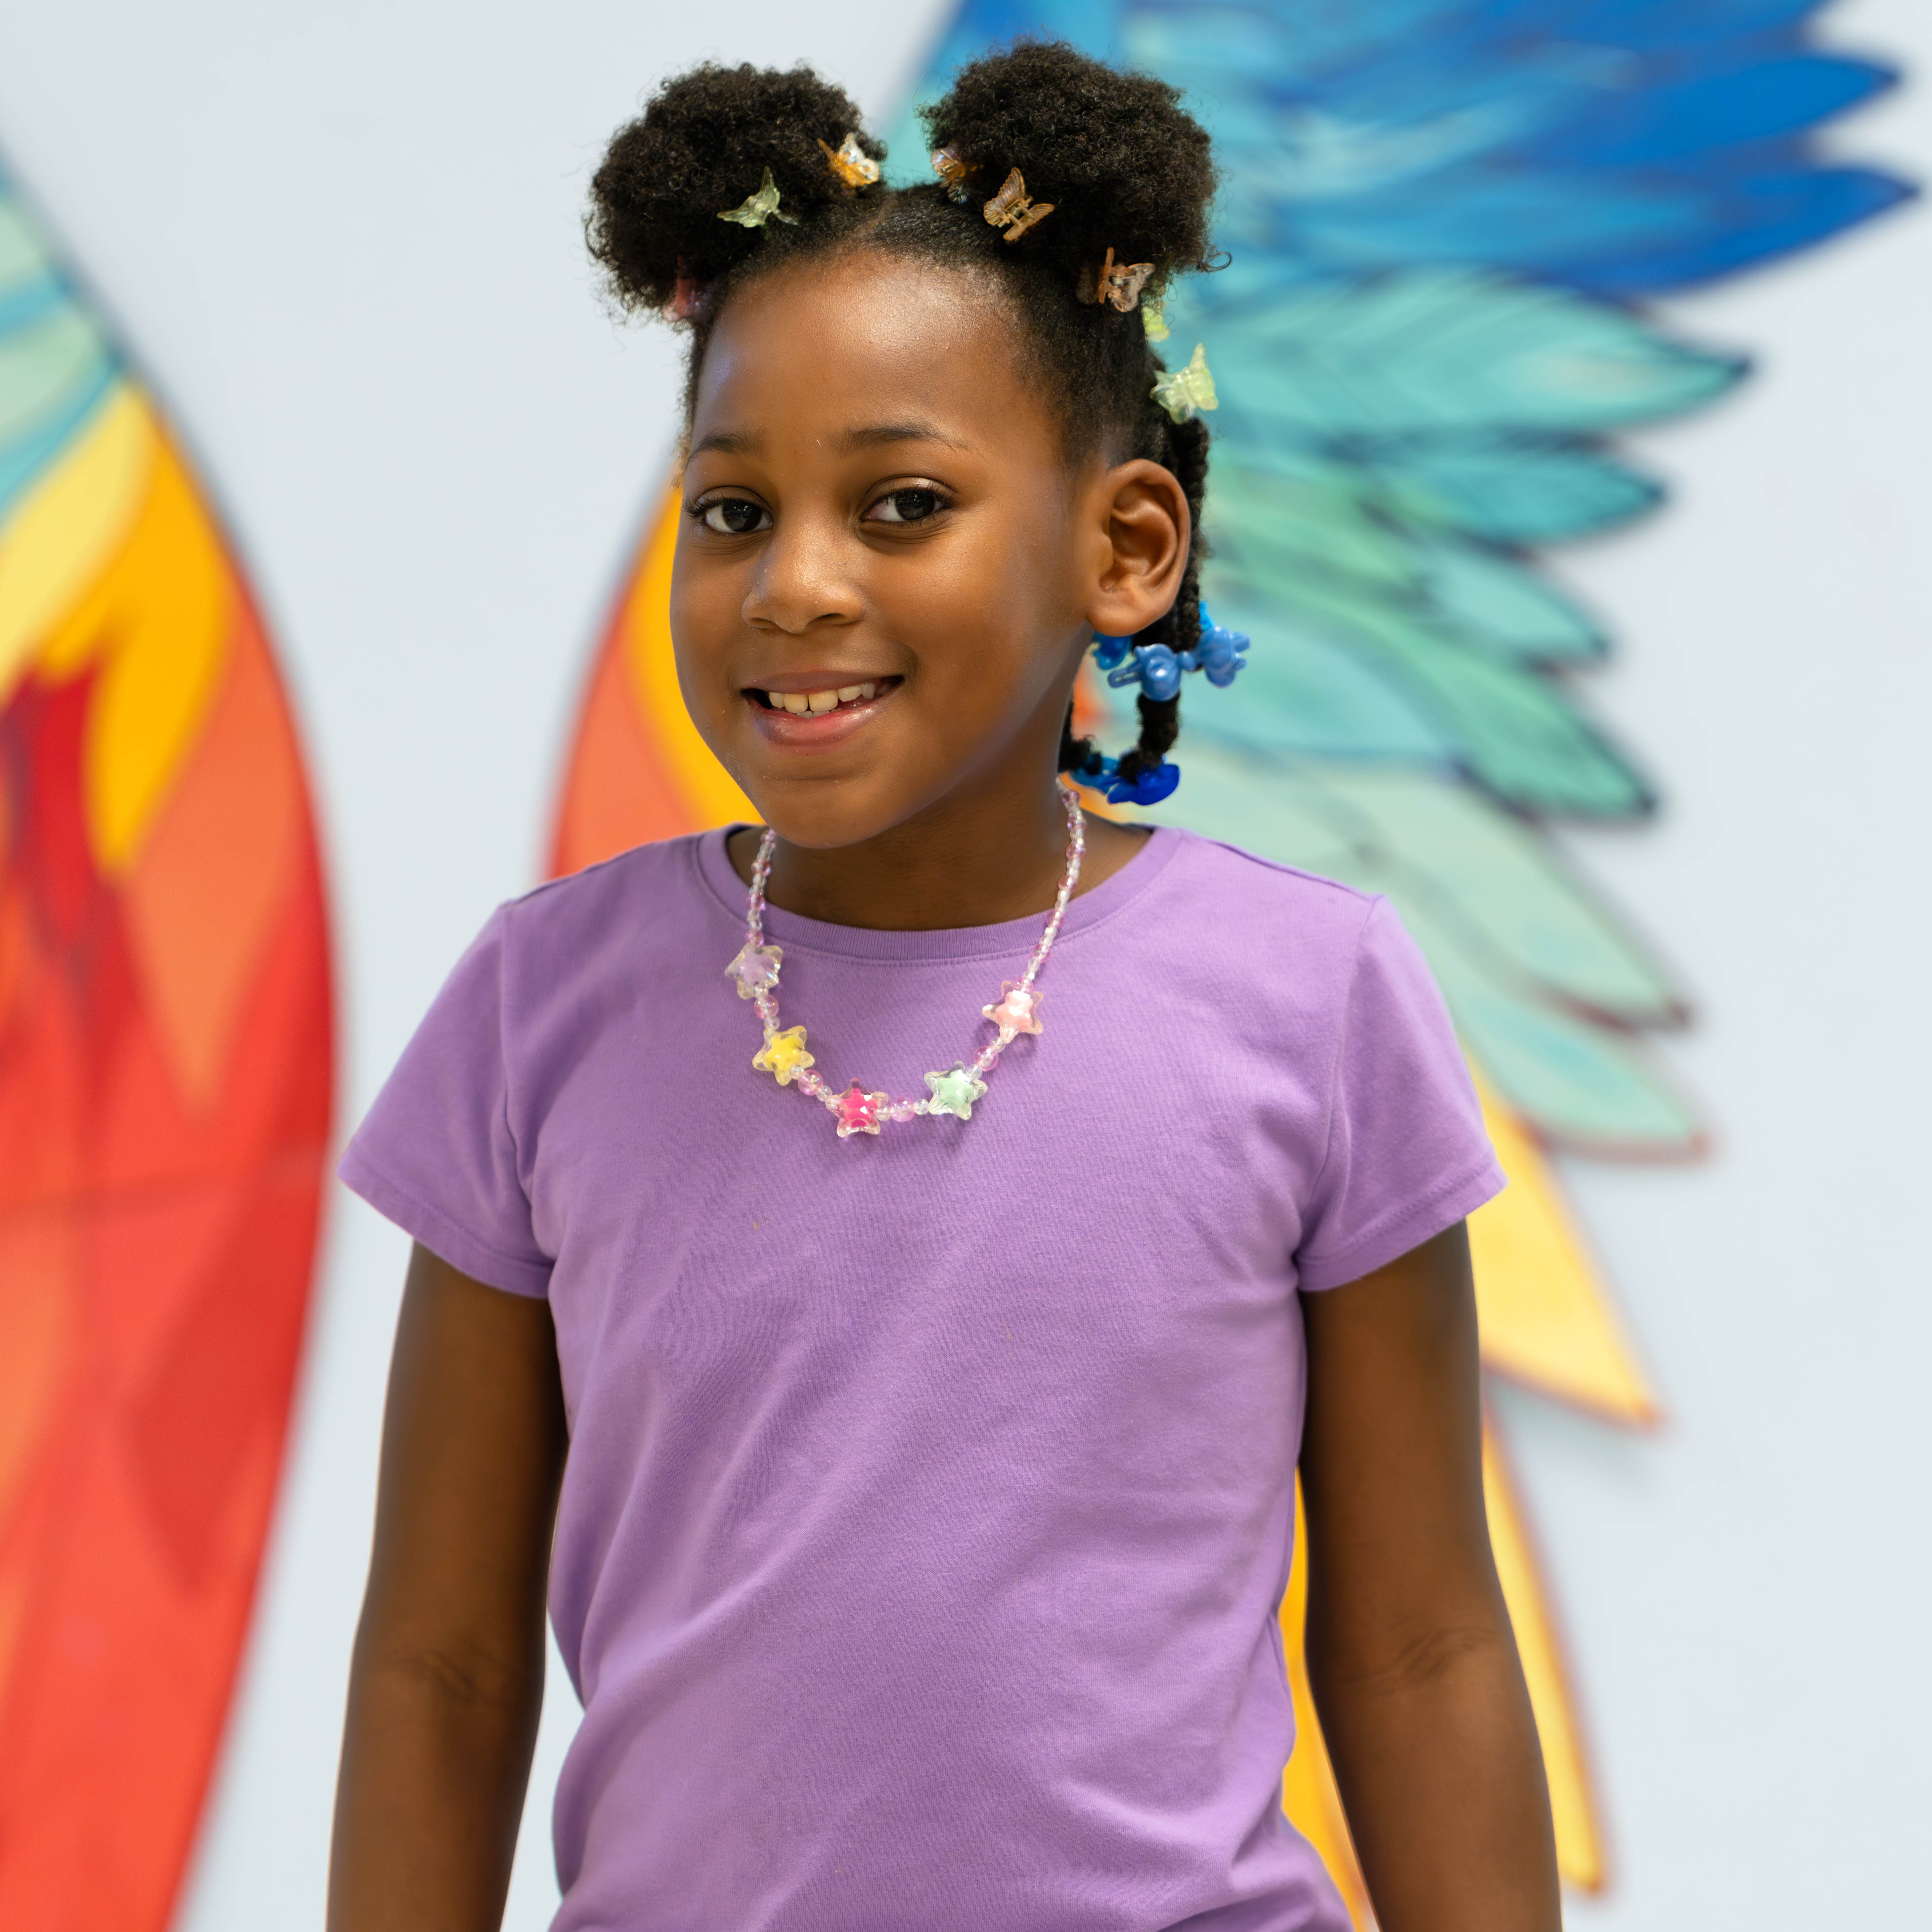 elementary age African American girl wearing a purple tshirt